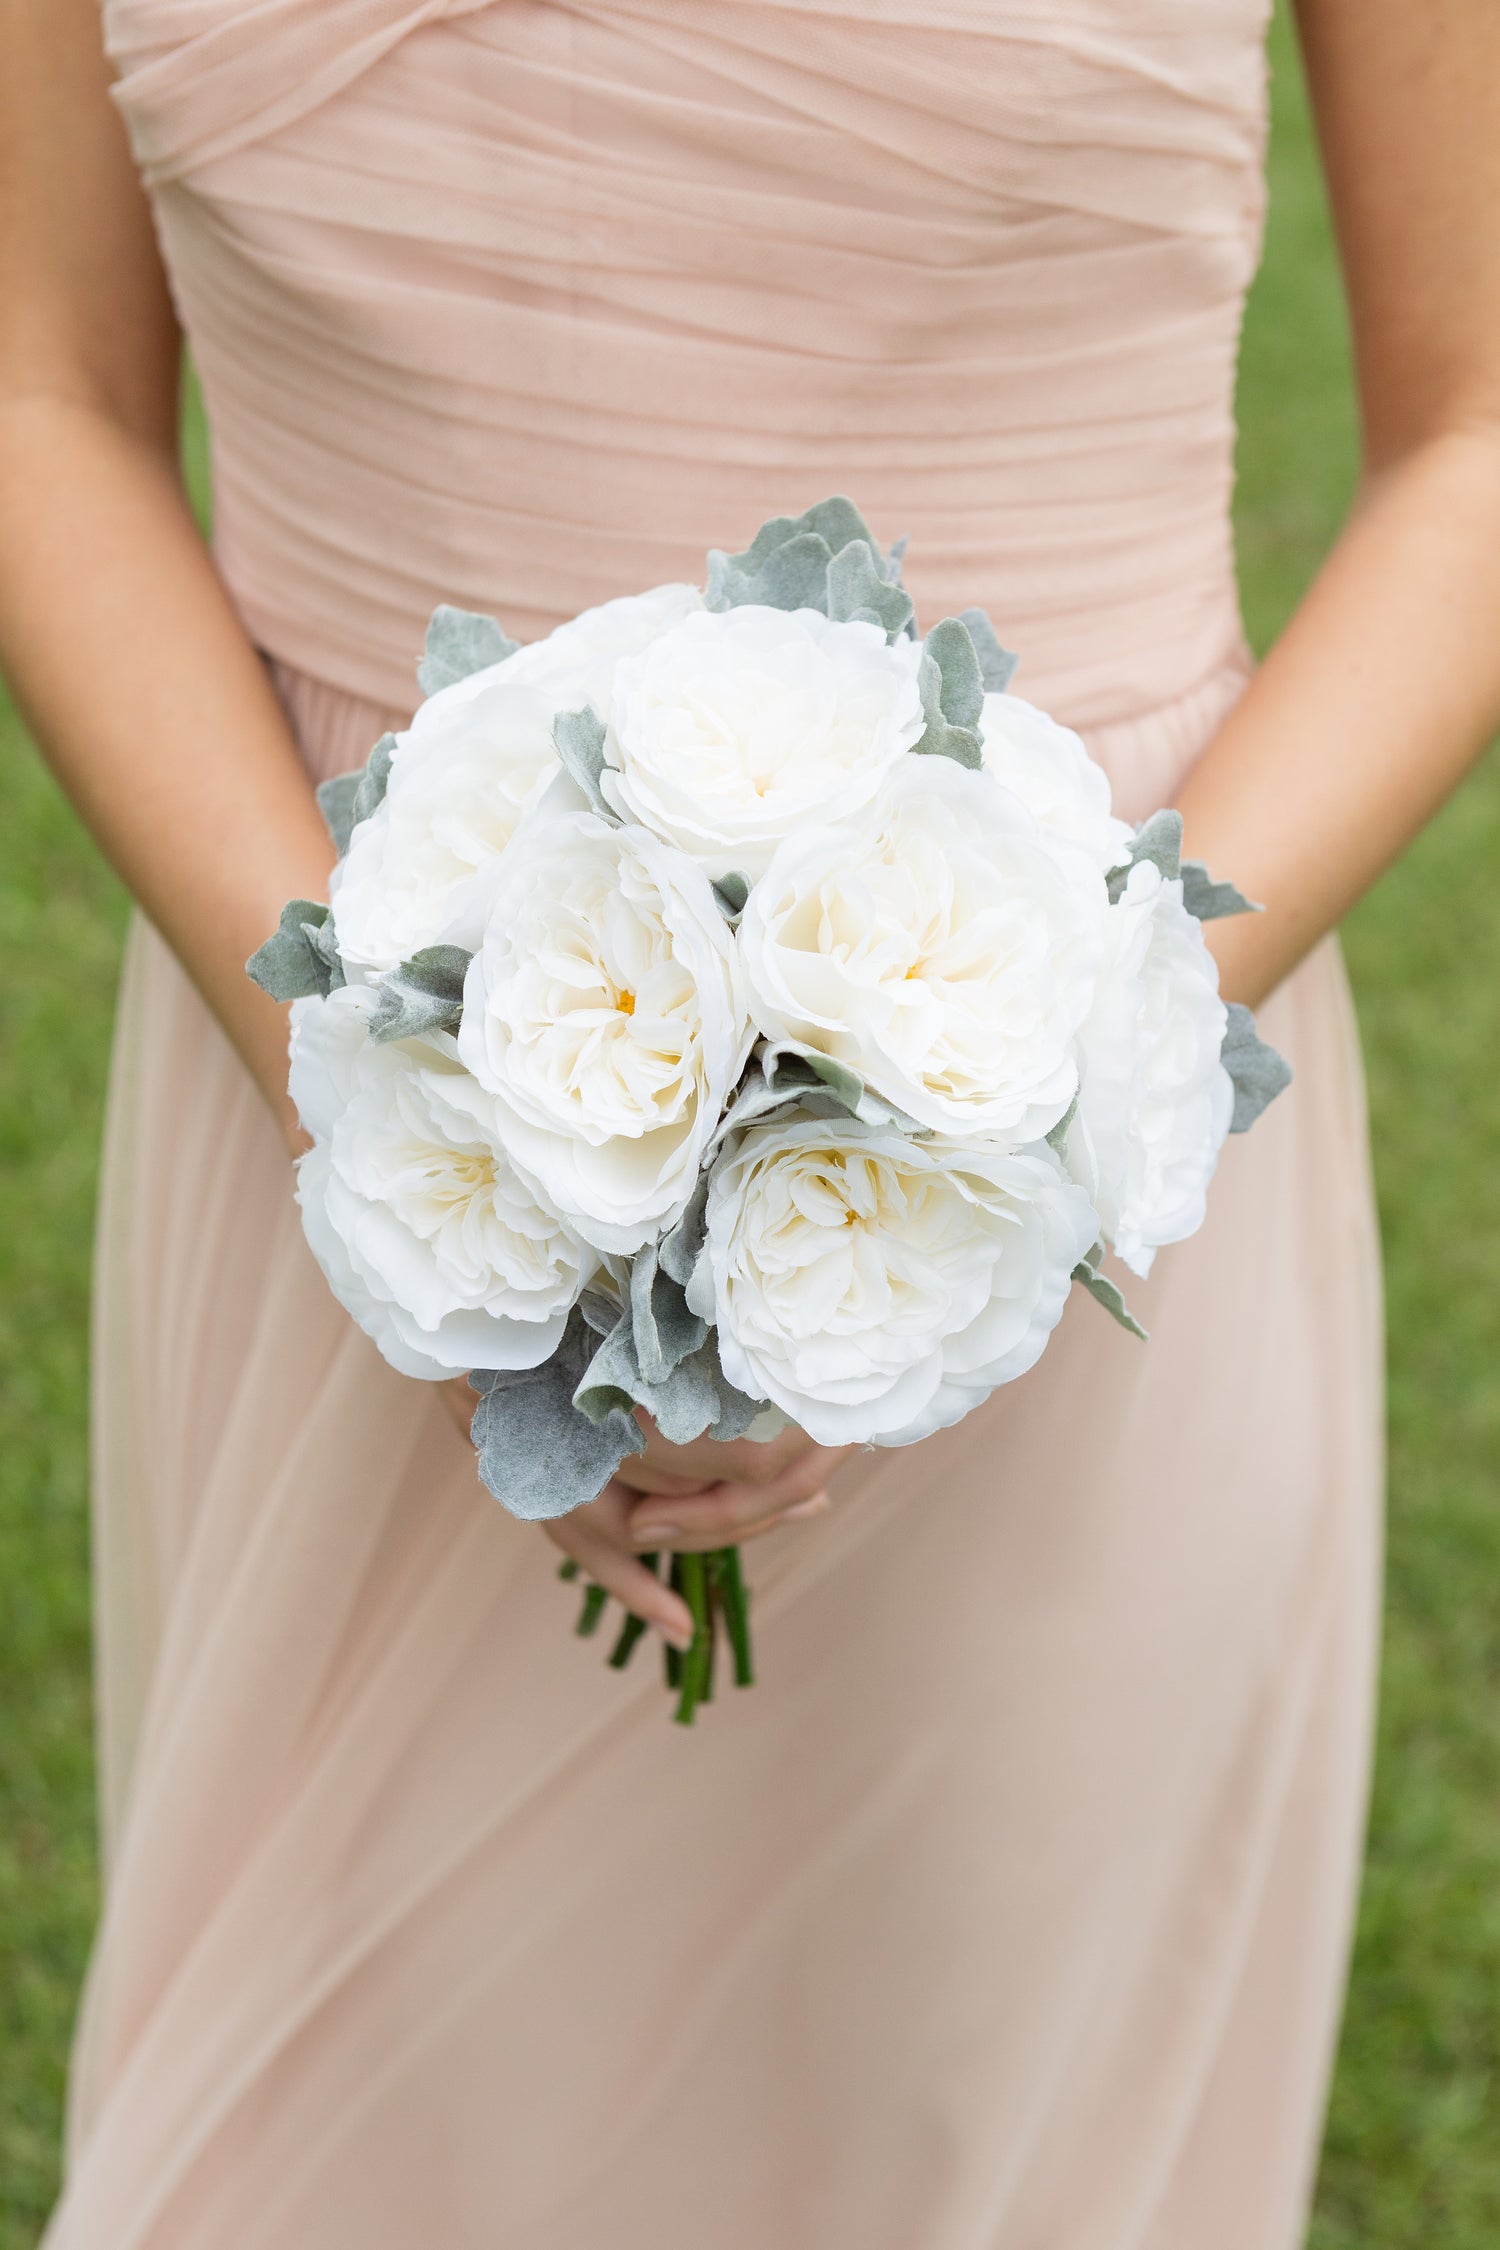 DIY Wedding Flowers - Burgundy Beauty